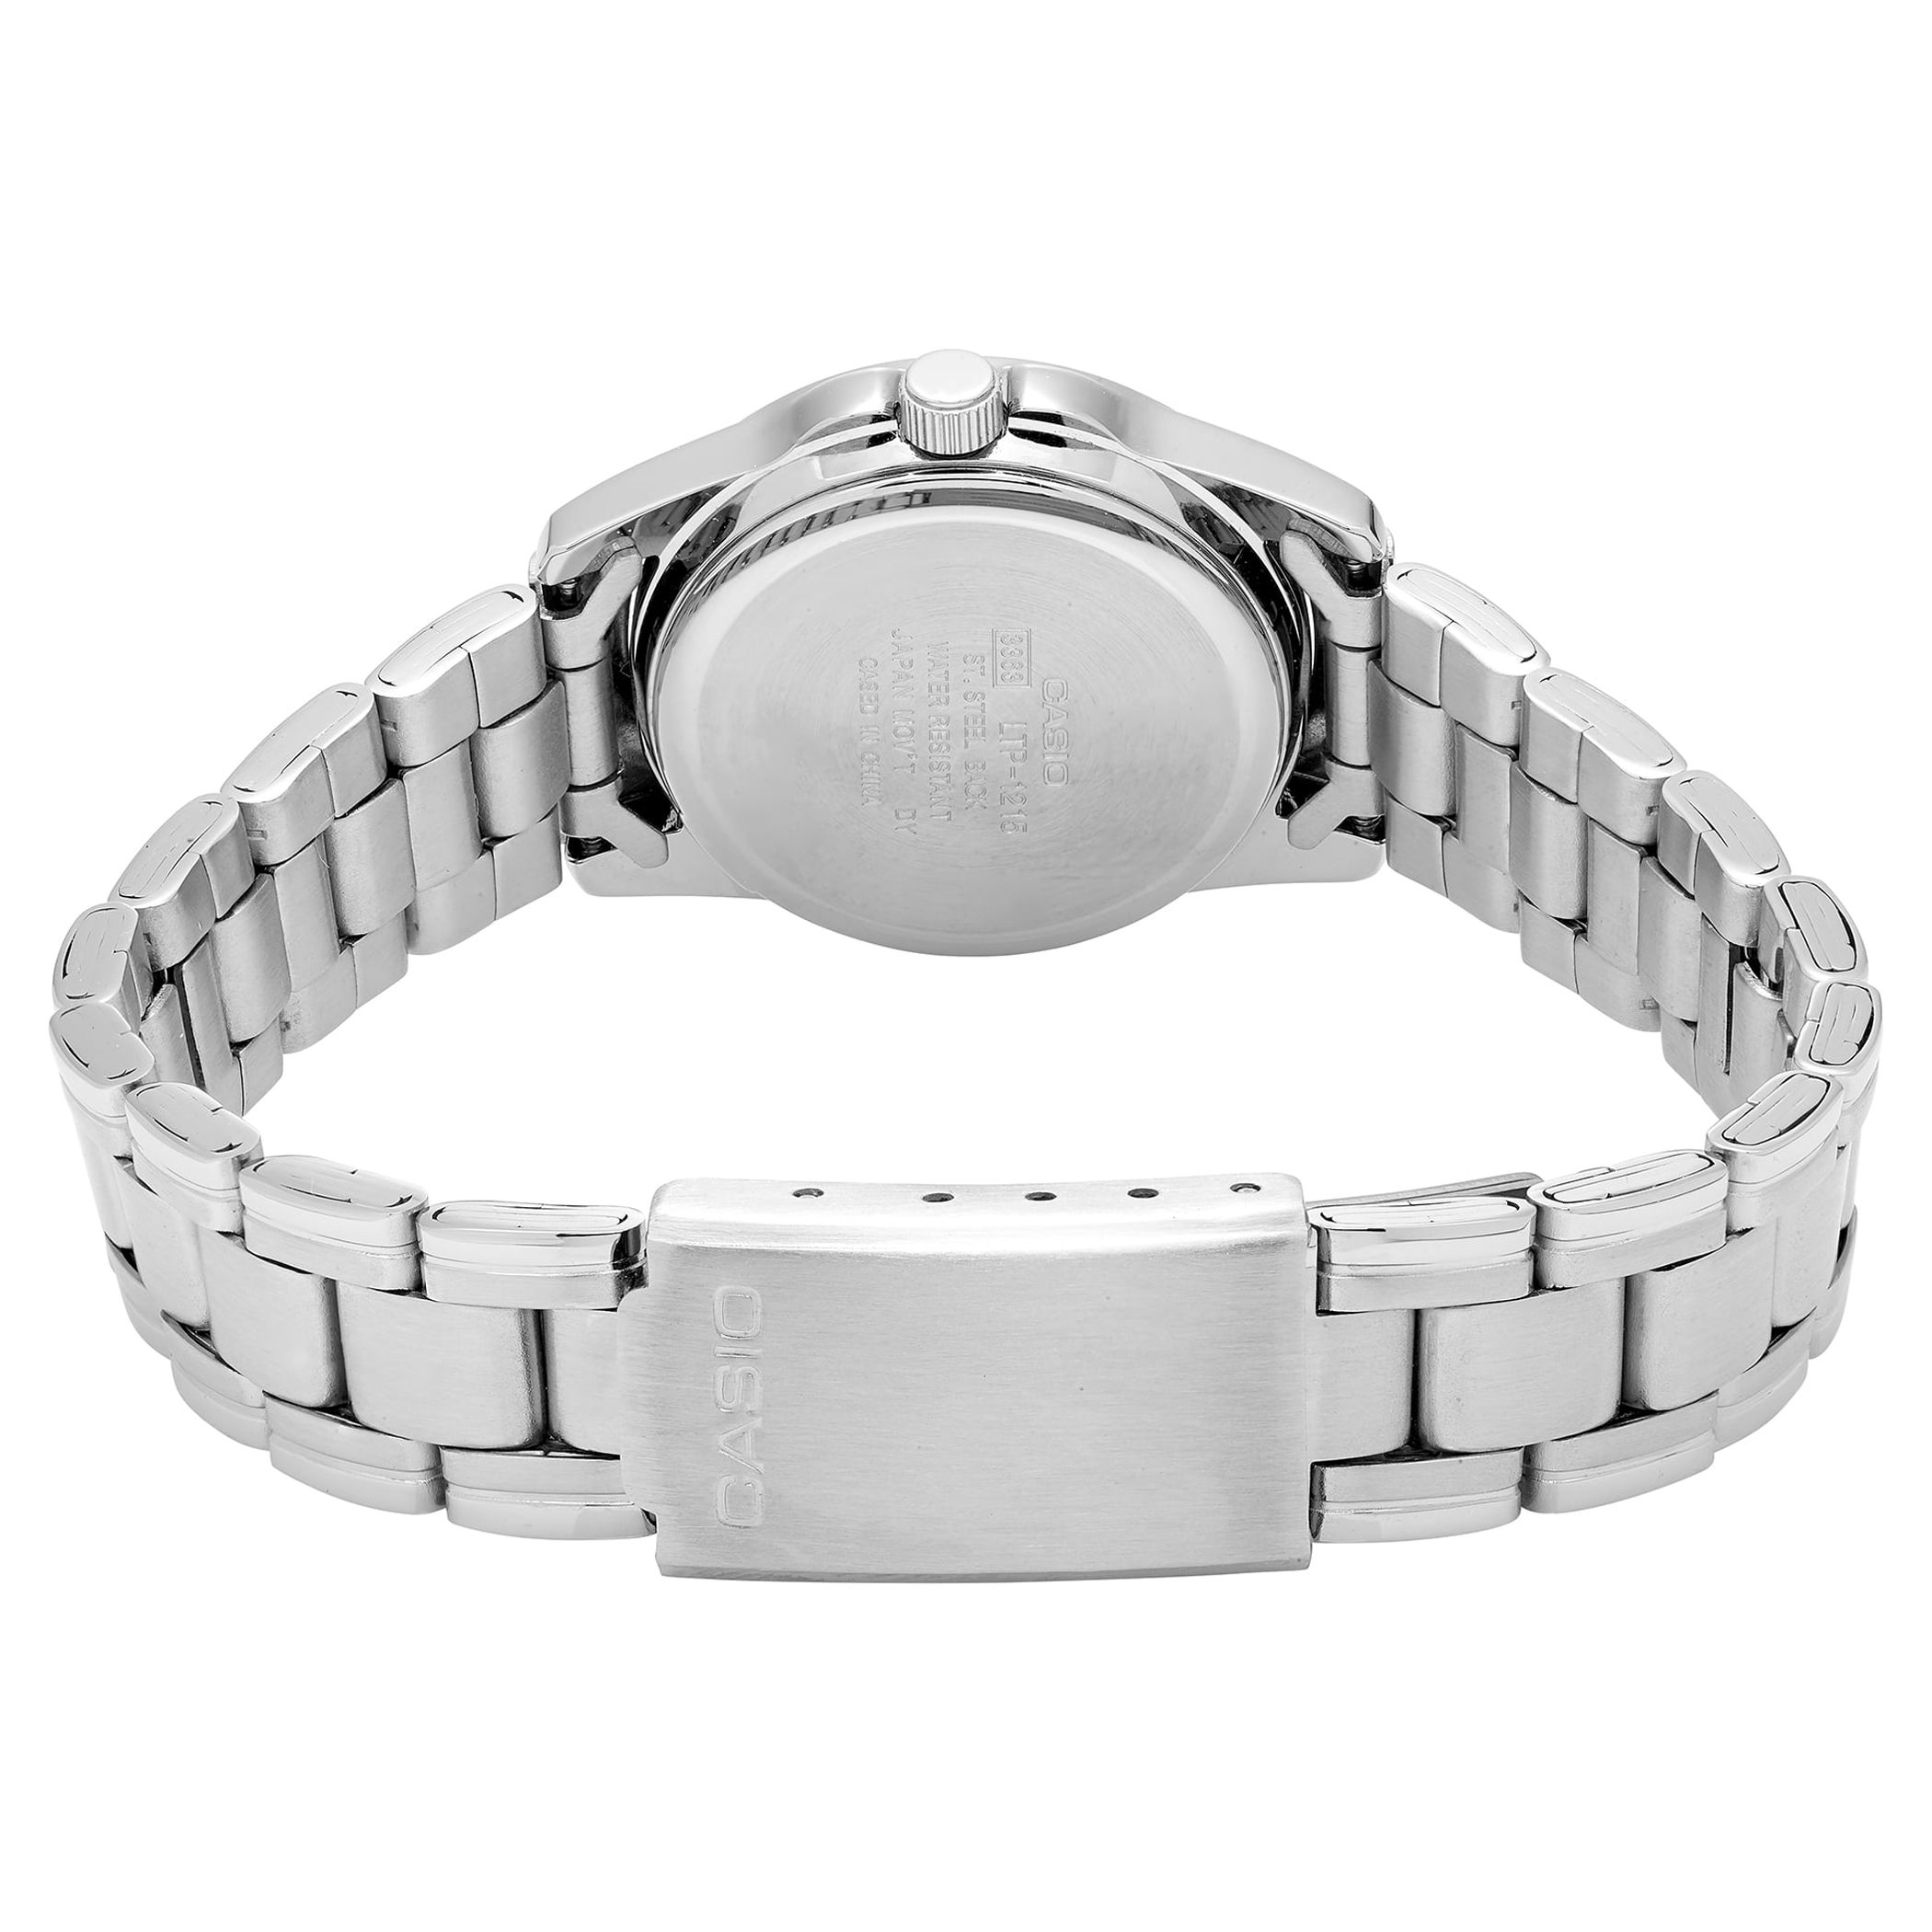 Women's Silver Dial Watch, Stainless-Steel Bracelet - image 2 of 3